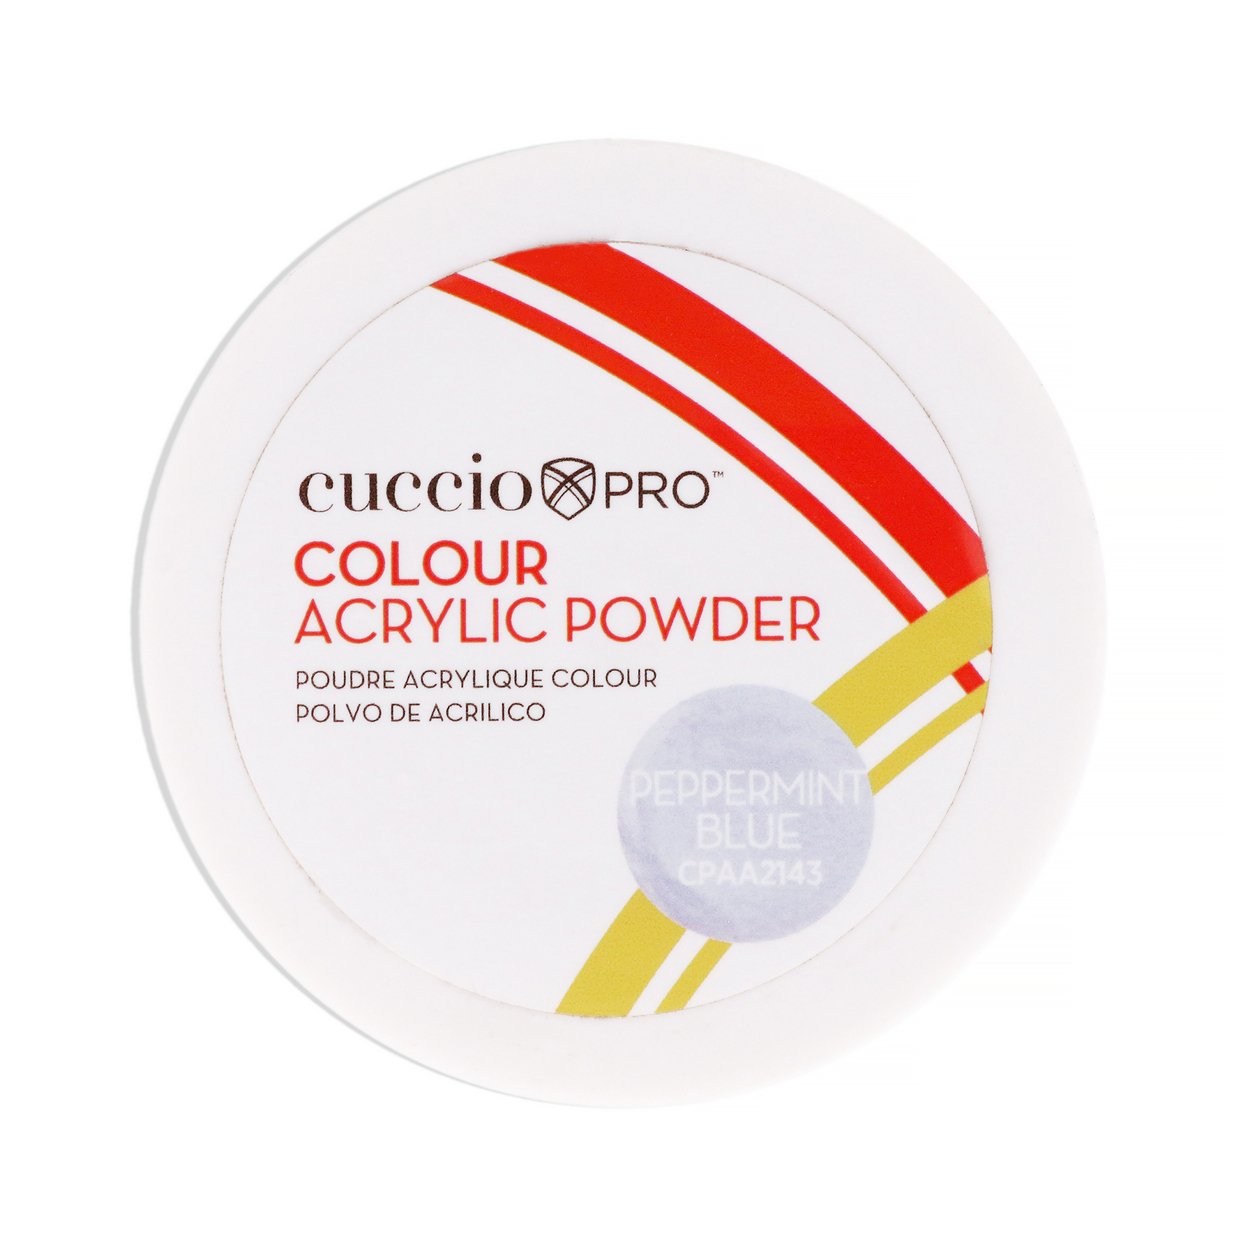 Cuccio PRO Colour Acrylic Powder - Peppermint Blue 1.6 Oz